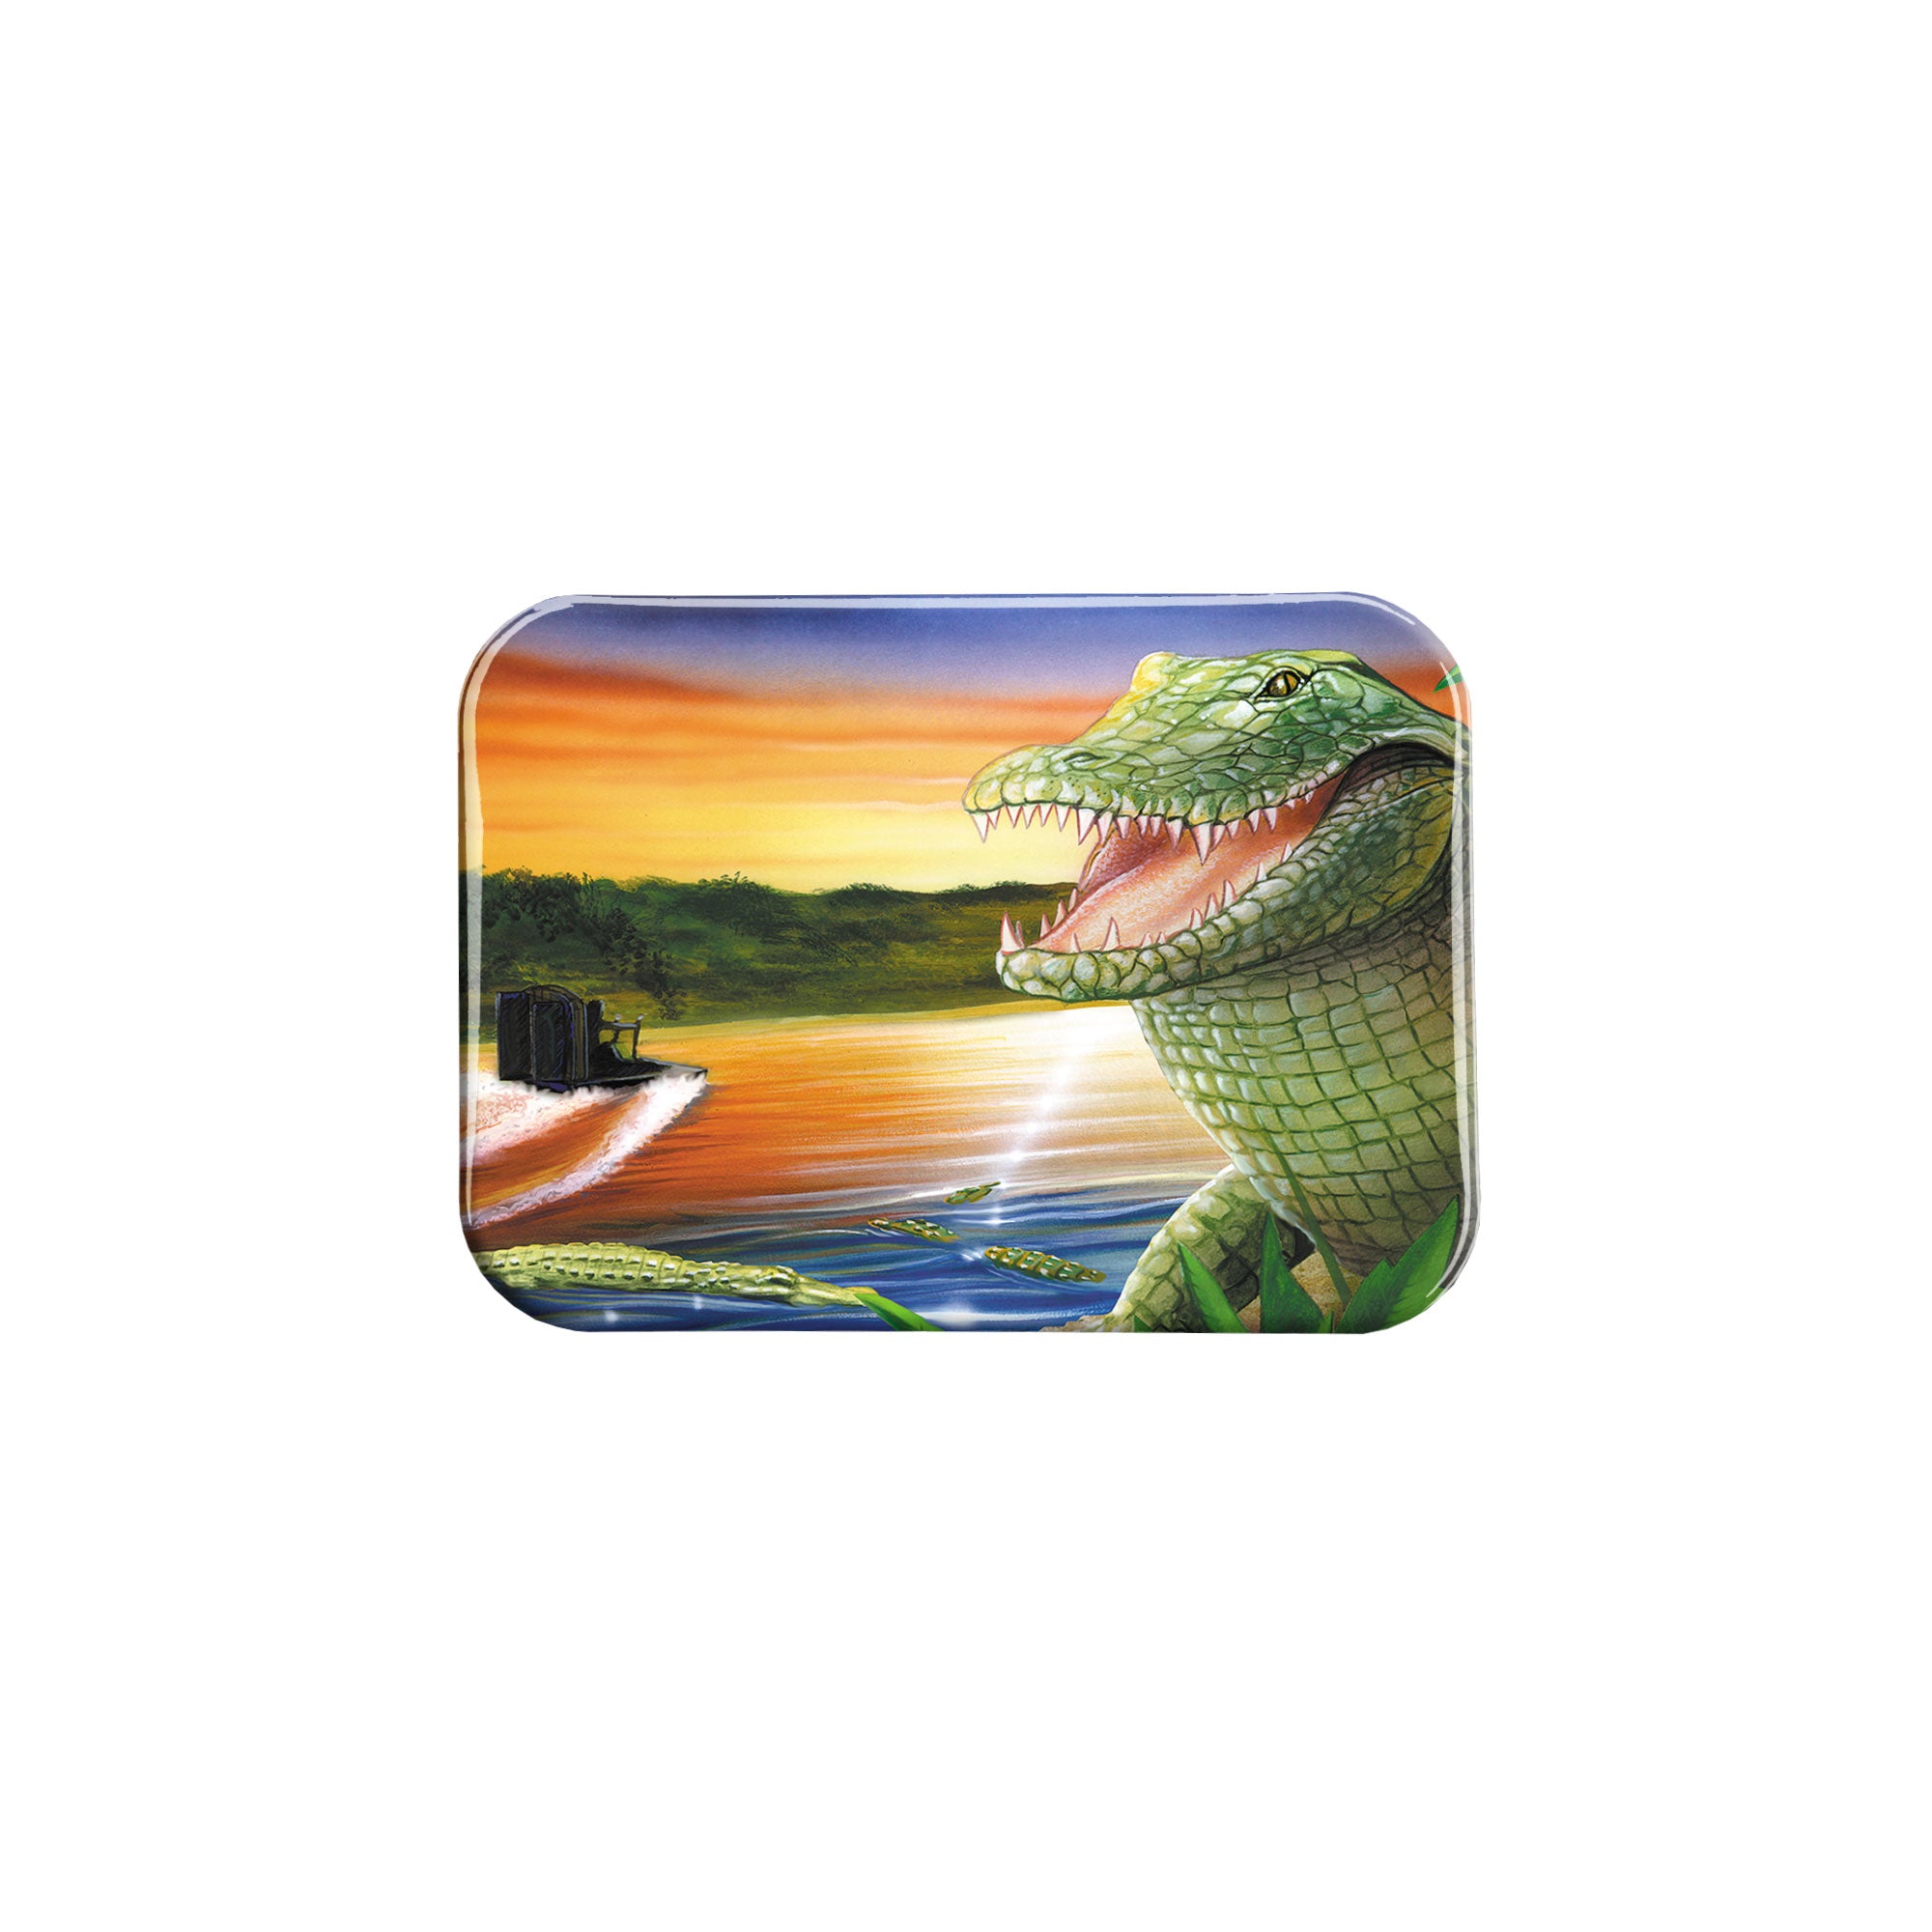 "Alligator Lagoon" - 2.5" X 3.5" Rectangle Fridge Magnets